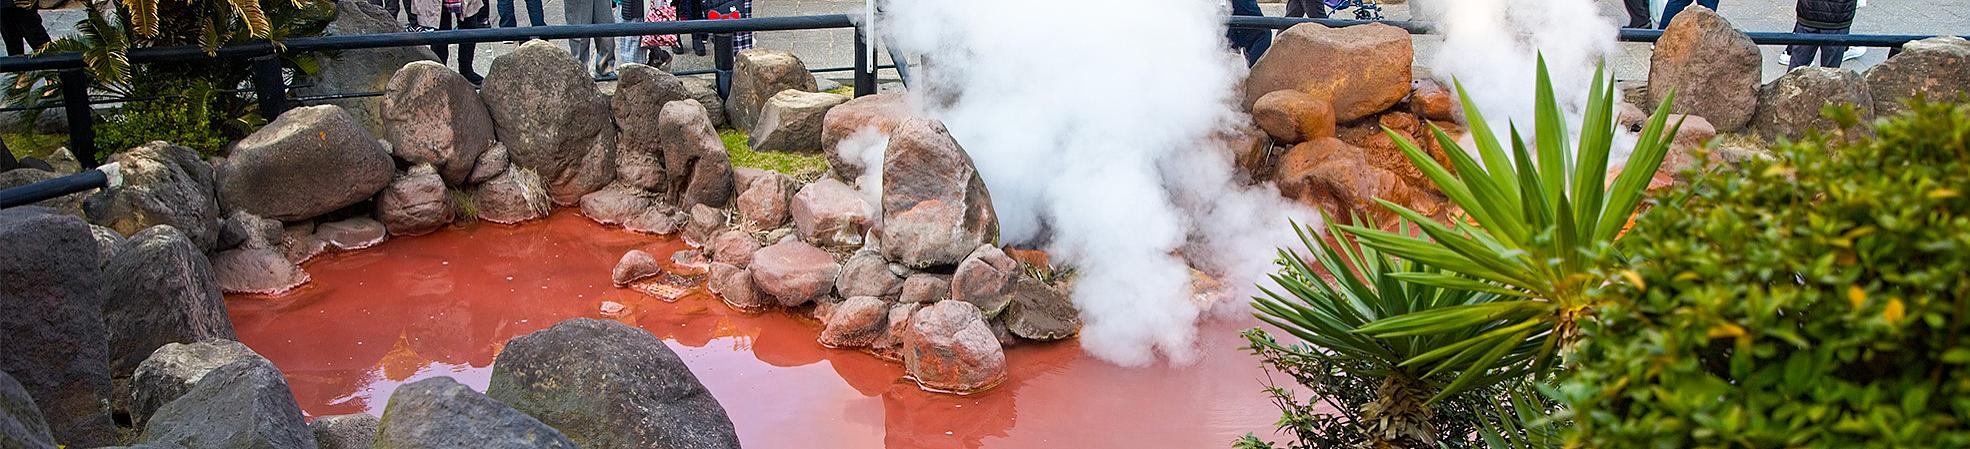 Japanese Hot Springs Onsens